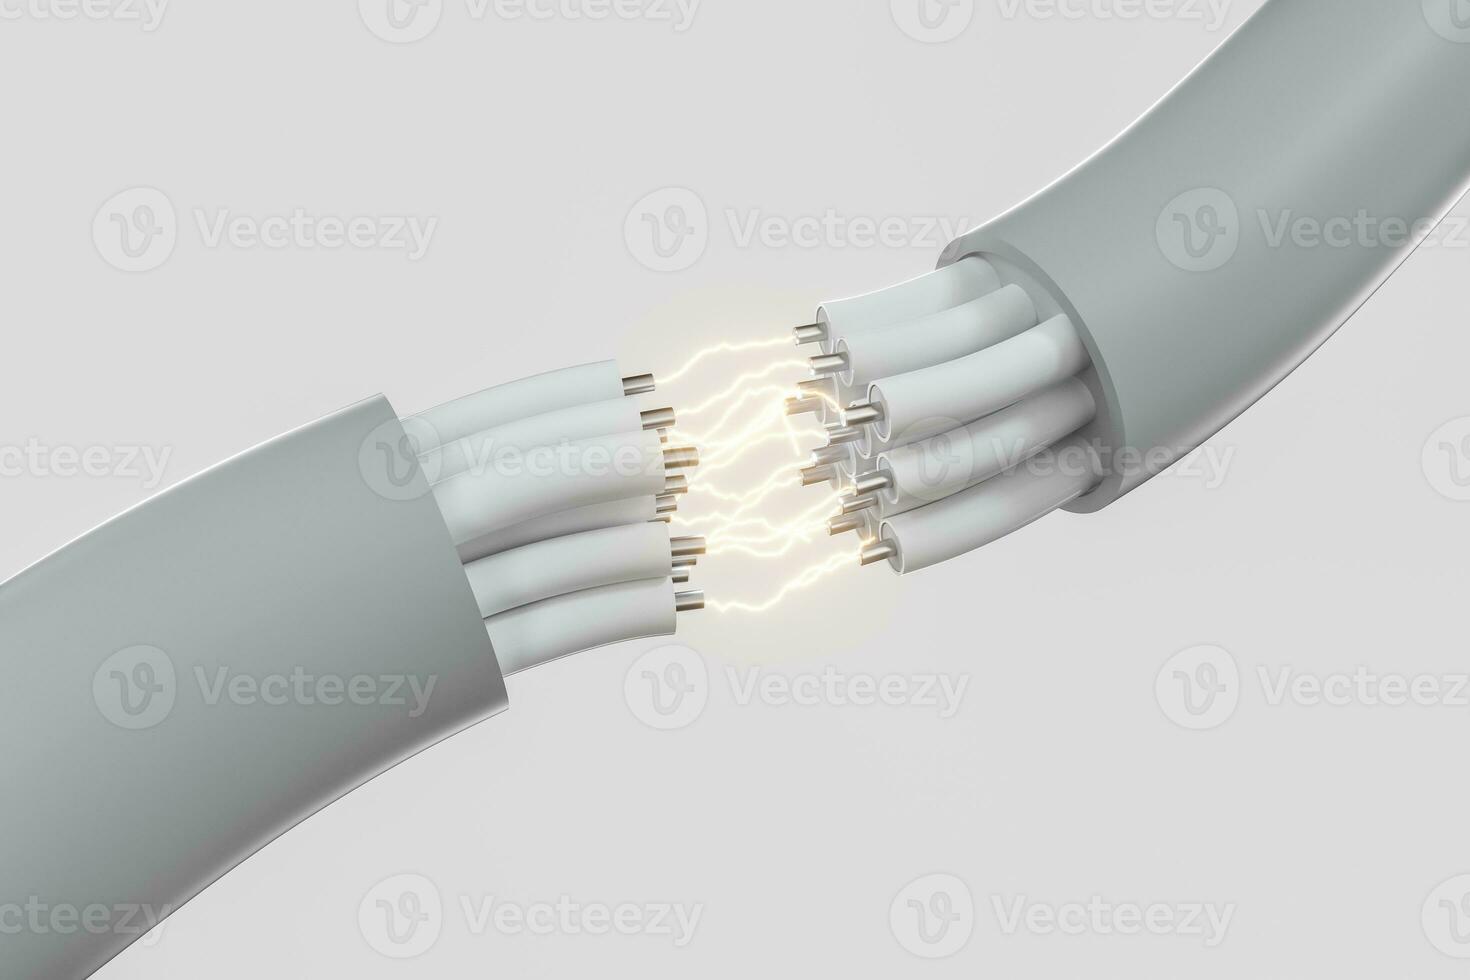 kabel met uitgebreid kern, elektronisch verbinding Product, met bliksem effect 3d weergave. foto